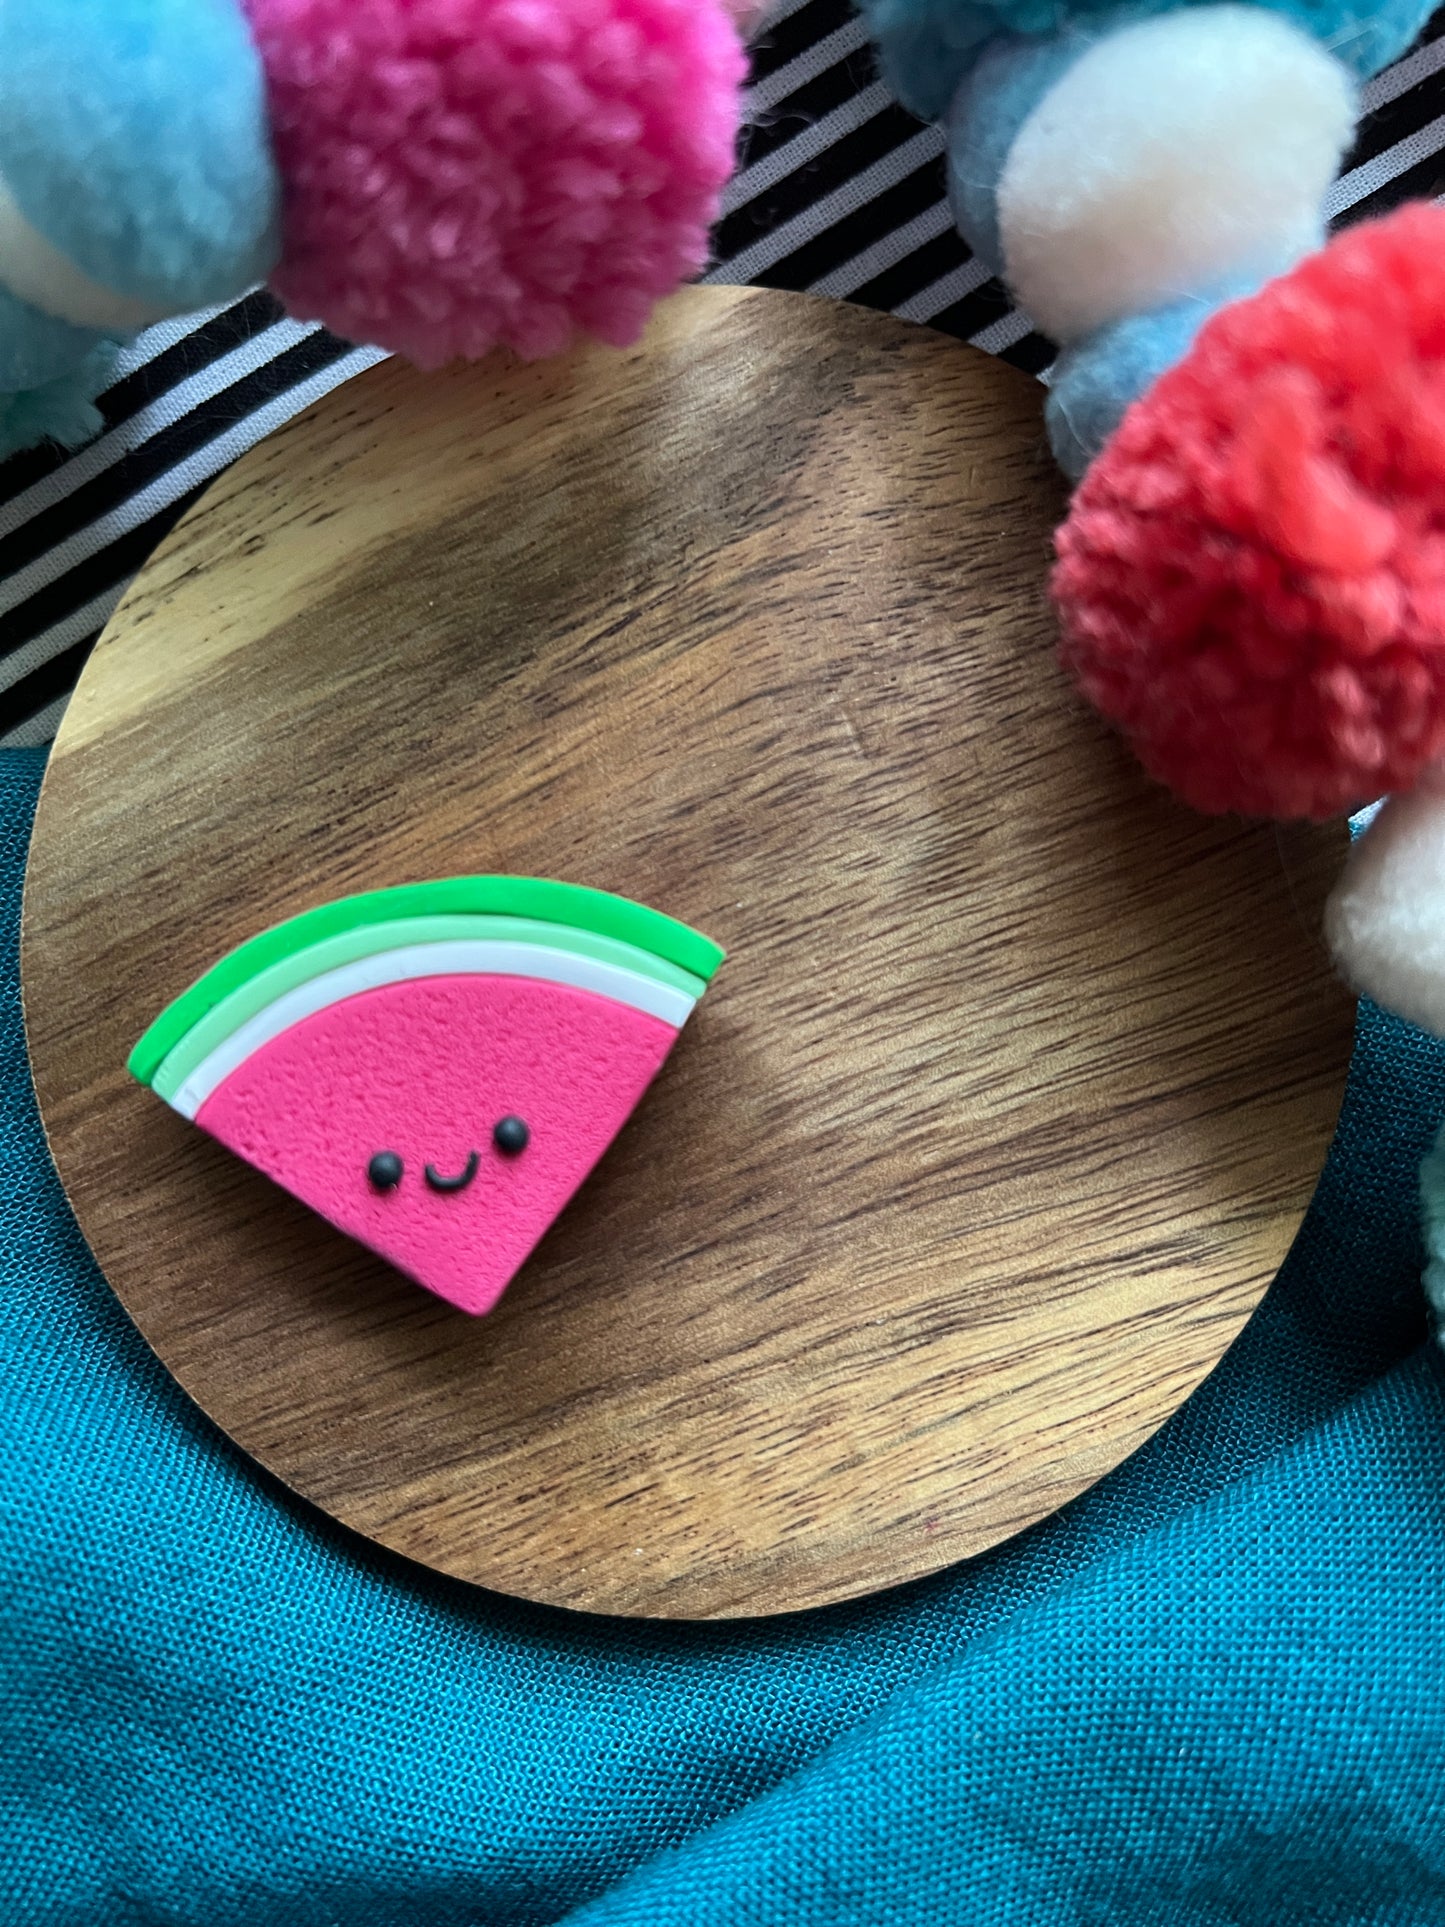 Fruit Stand | Fruit Magnet